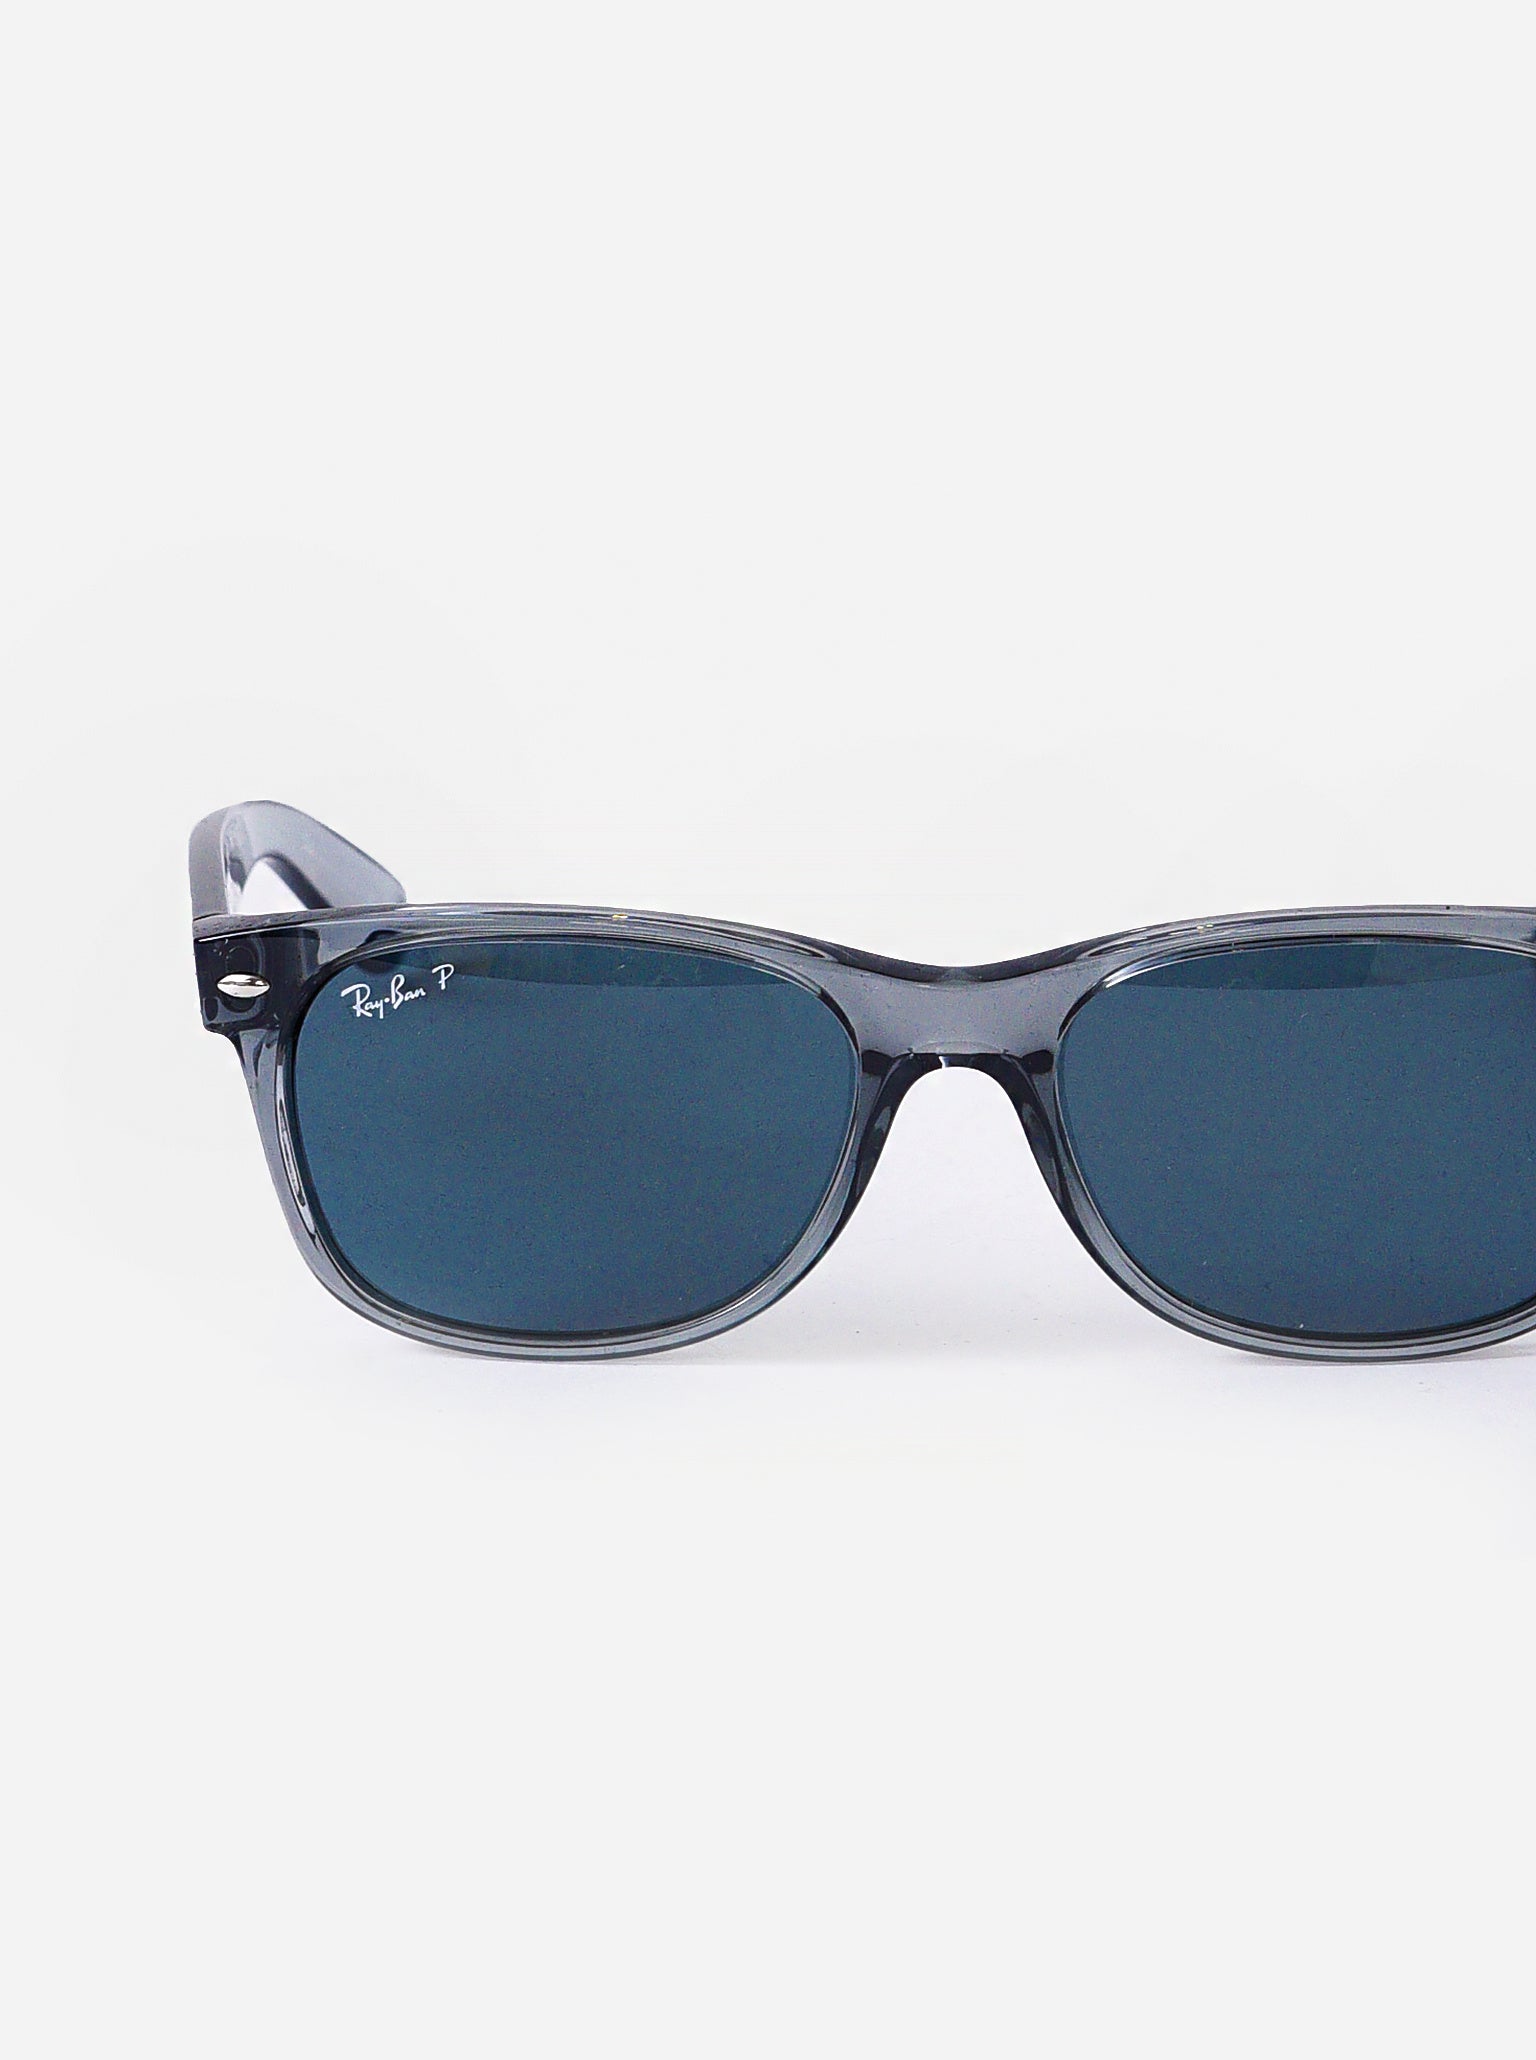 Ray-Ban New Wayfarer Classic Sunglasses - Saint Bernard